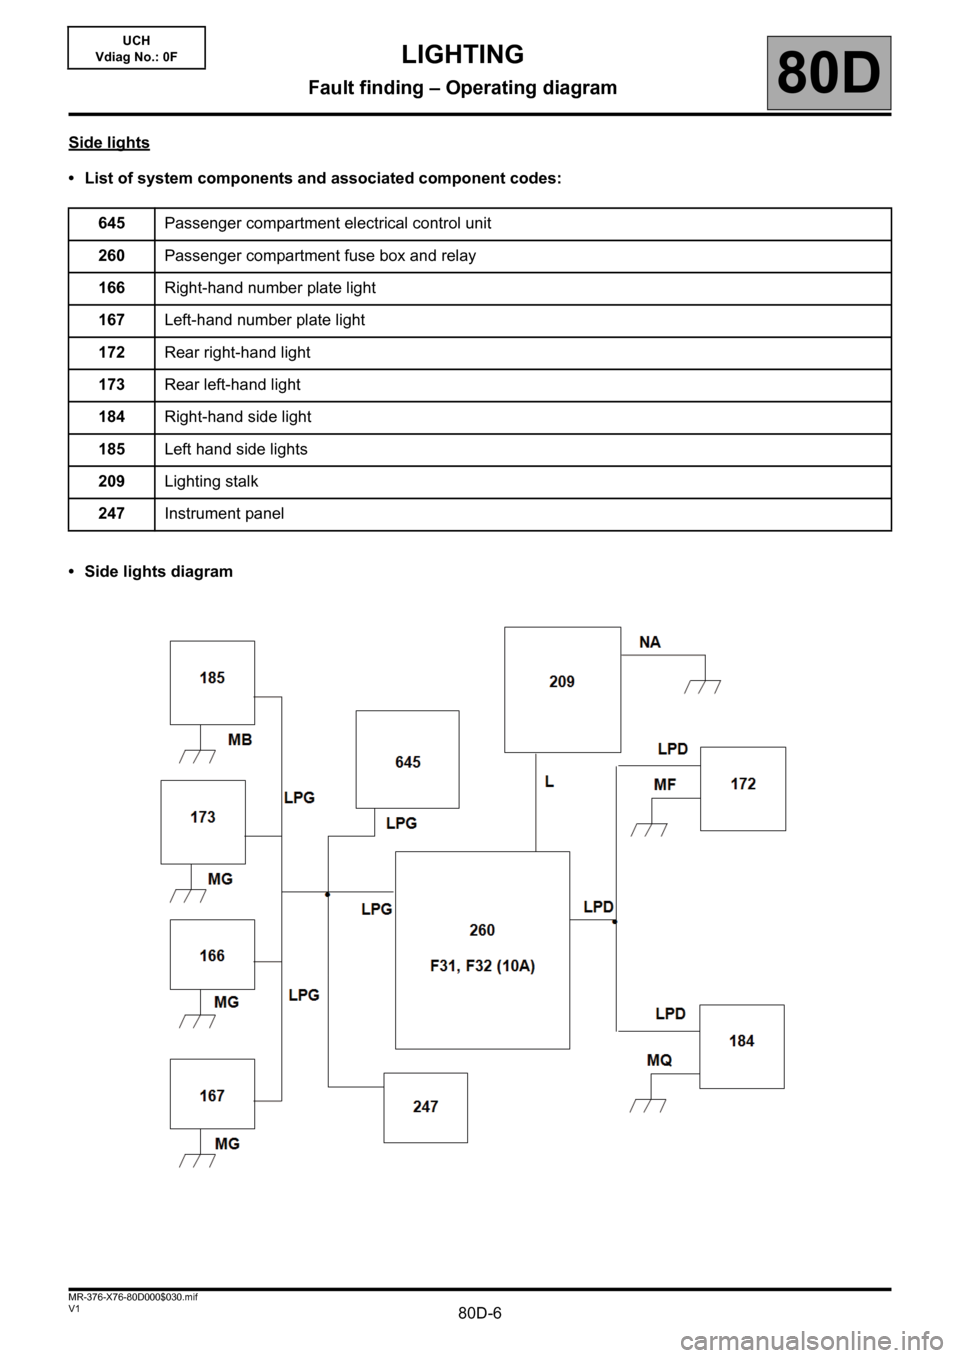 RENAULT KANGOO 2013 X61 / 2.G Lighting Workshop Manual 80D-6V1 MR-376-X76-80D000$030.mif
LIGHTING
Fault finding – Operating diagram80D
UCH
Vdiag No.: 0F
Side lights
• List of system components and associated component codes:
• Side lights diagram645